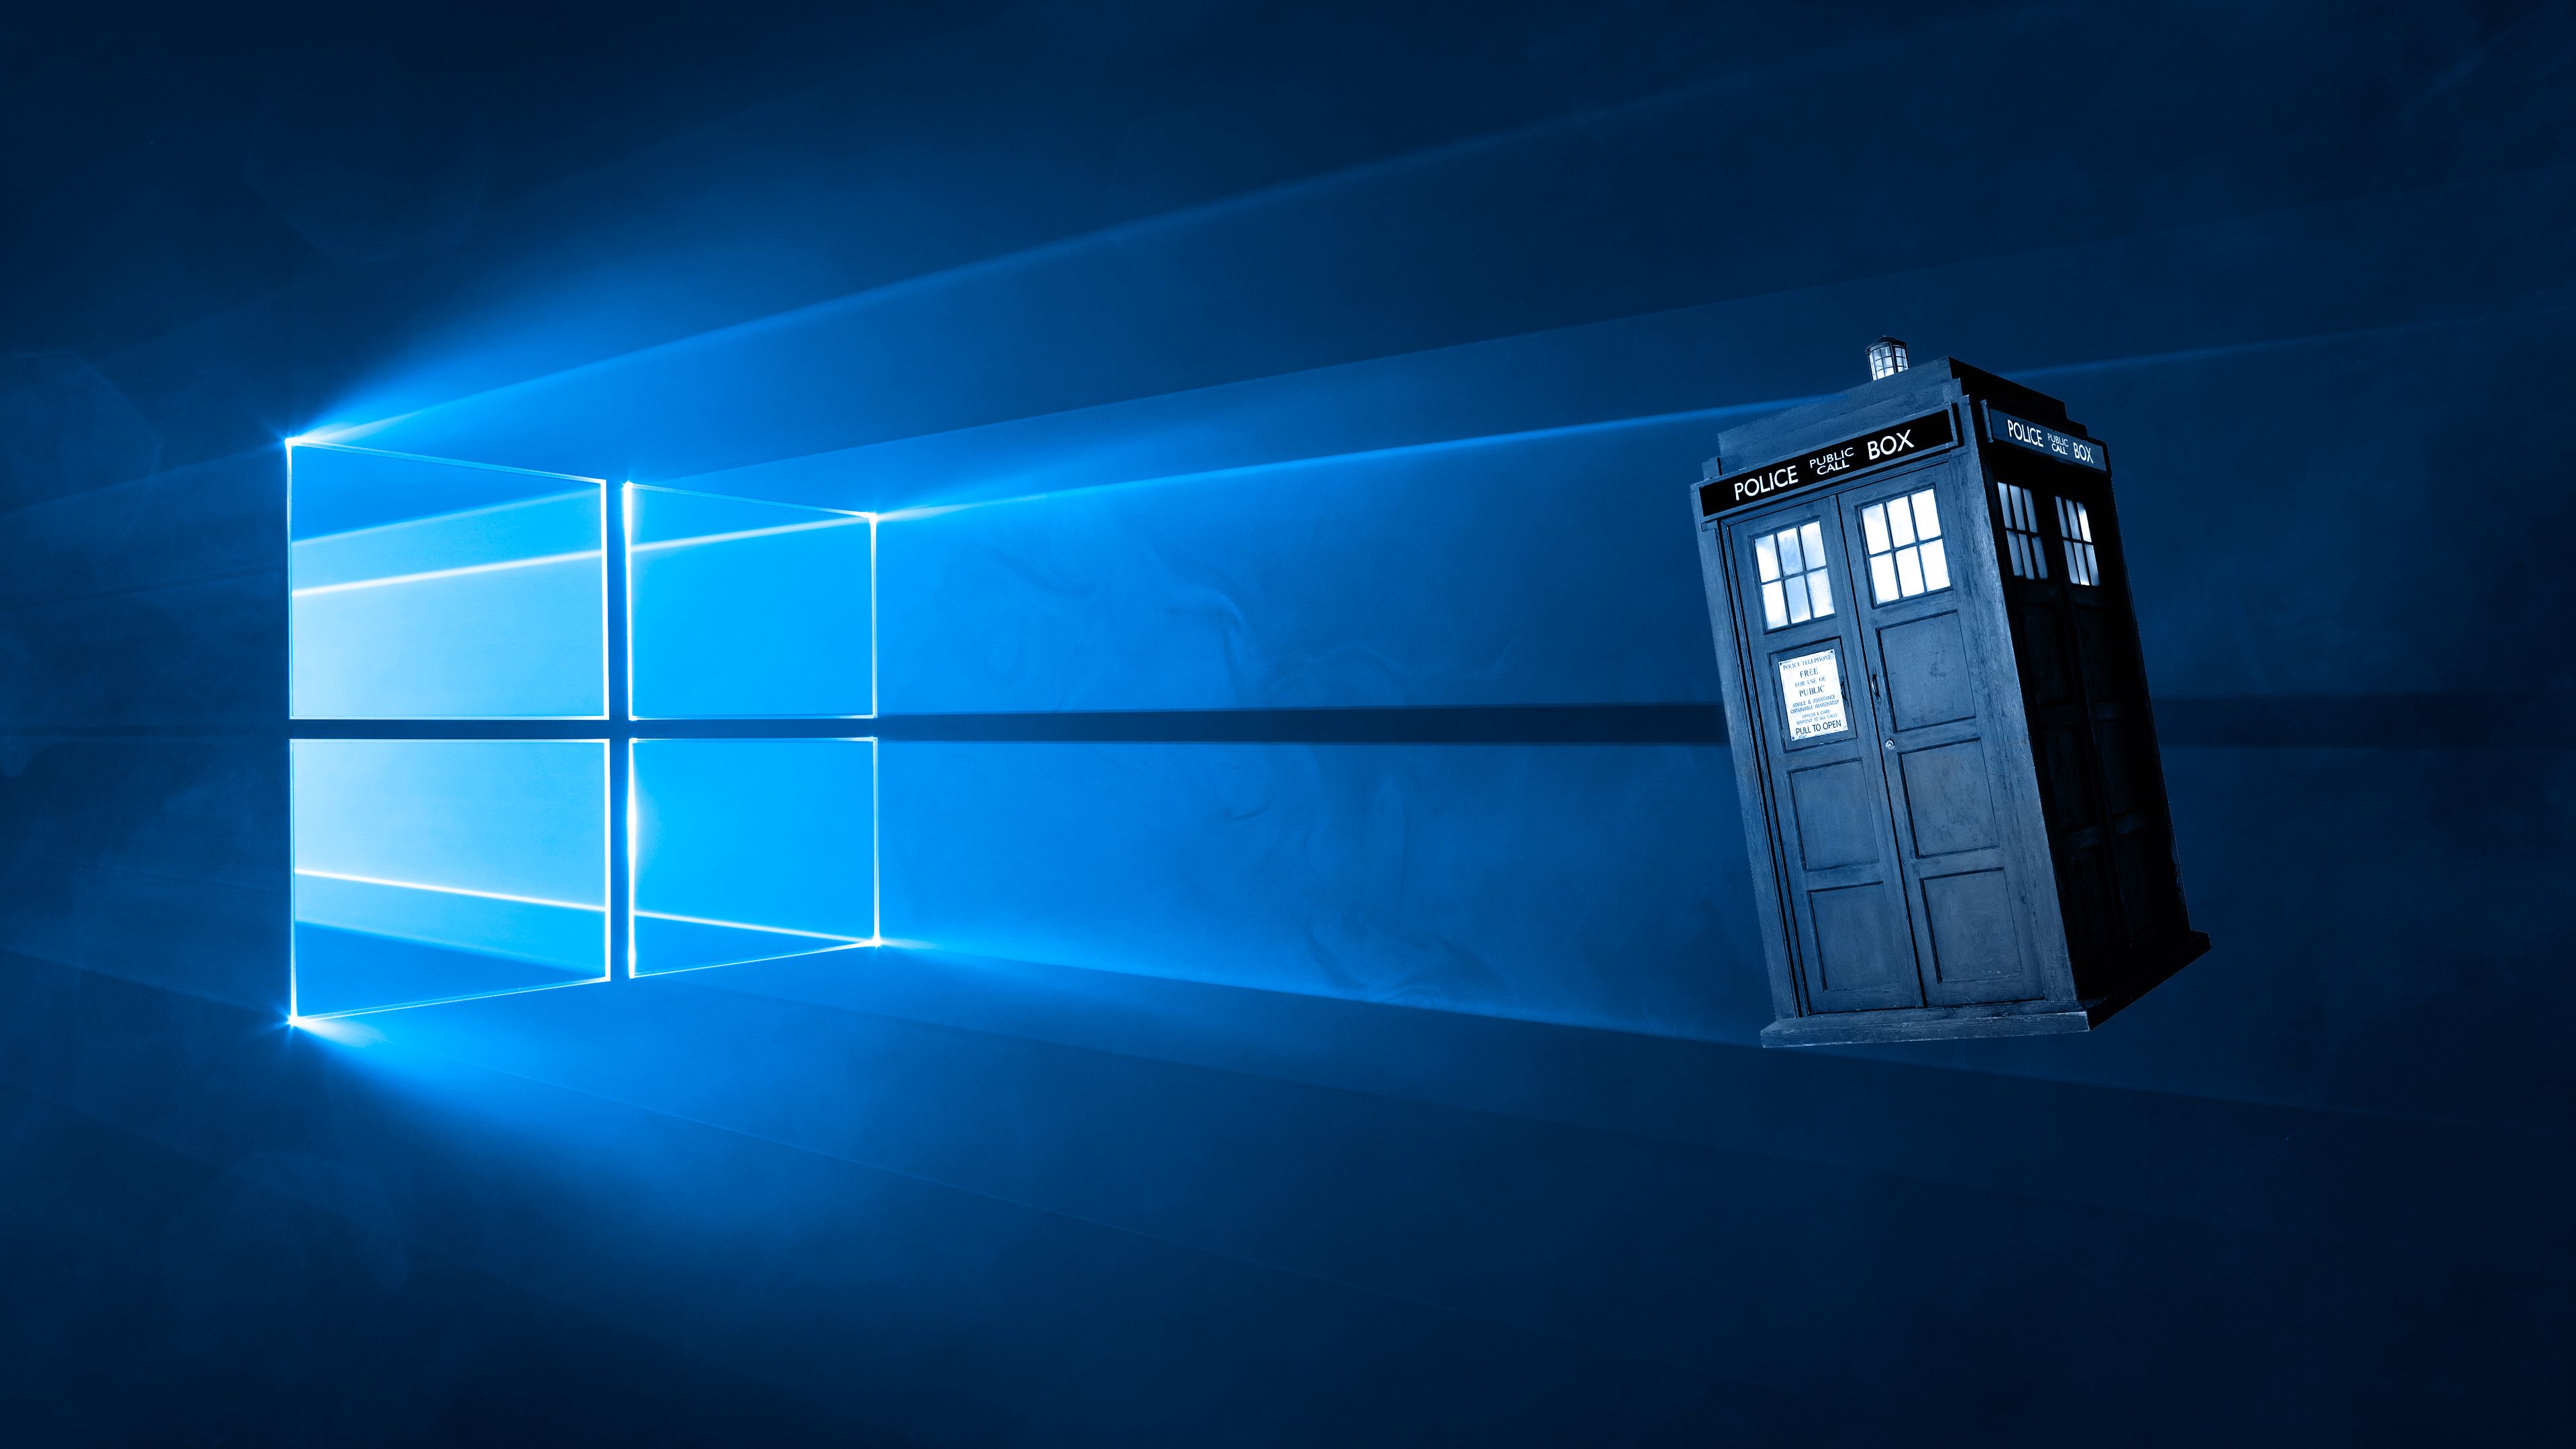 Doctor Who Windows 10 HD Wallpaper